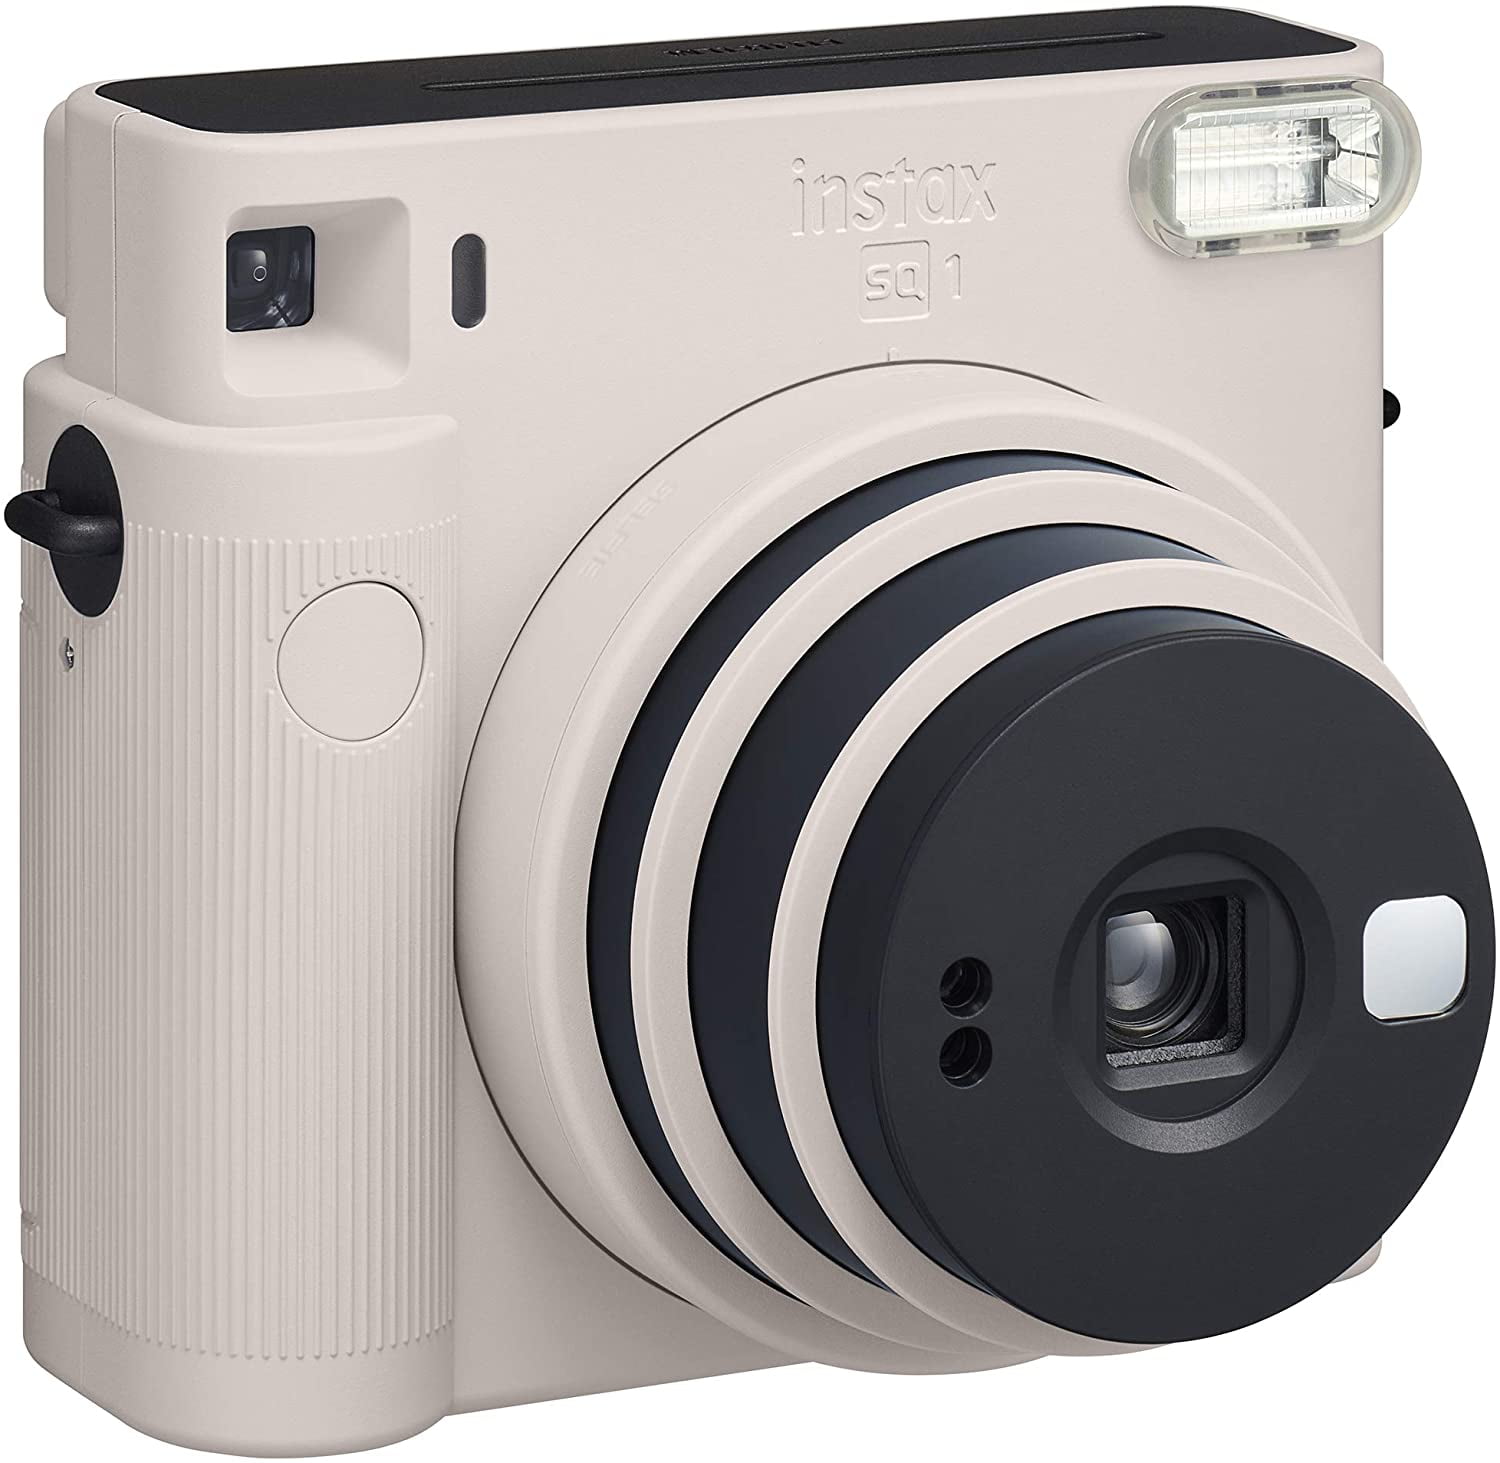 maximaal publiek Schrijf op Fujifilm INSTAX SQUARE SQ1 instant camera - White - Walmart.com